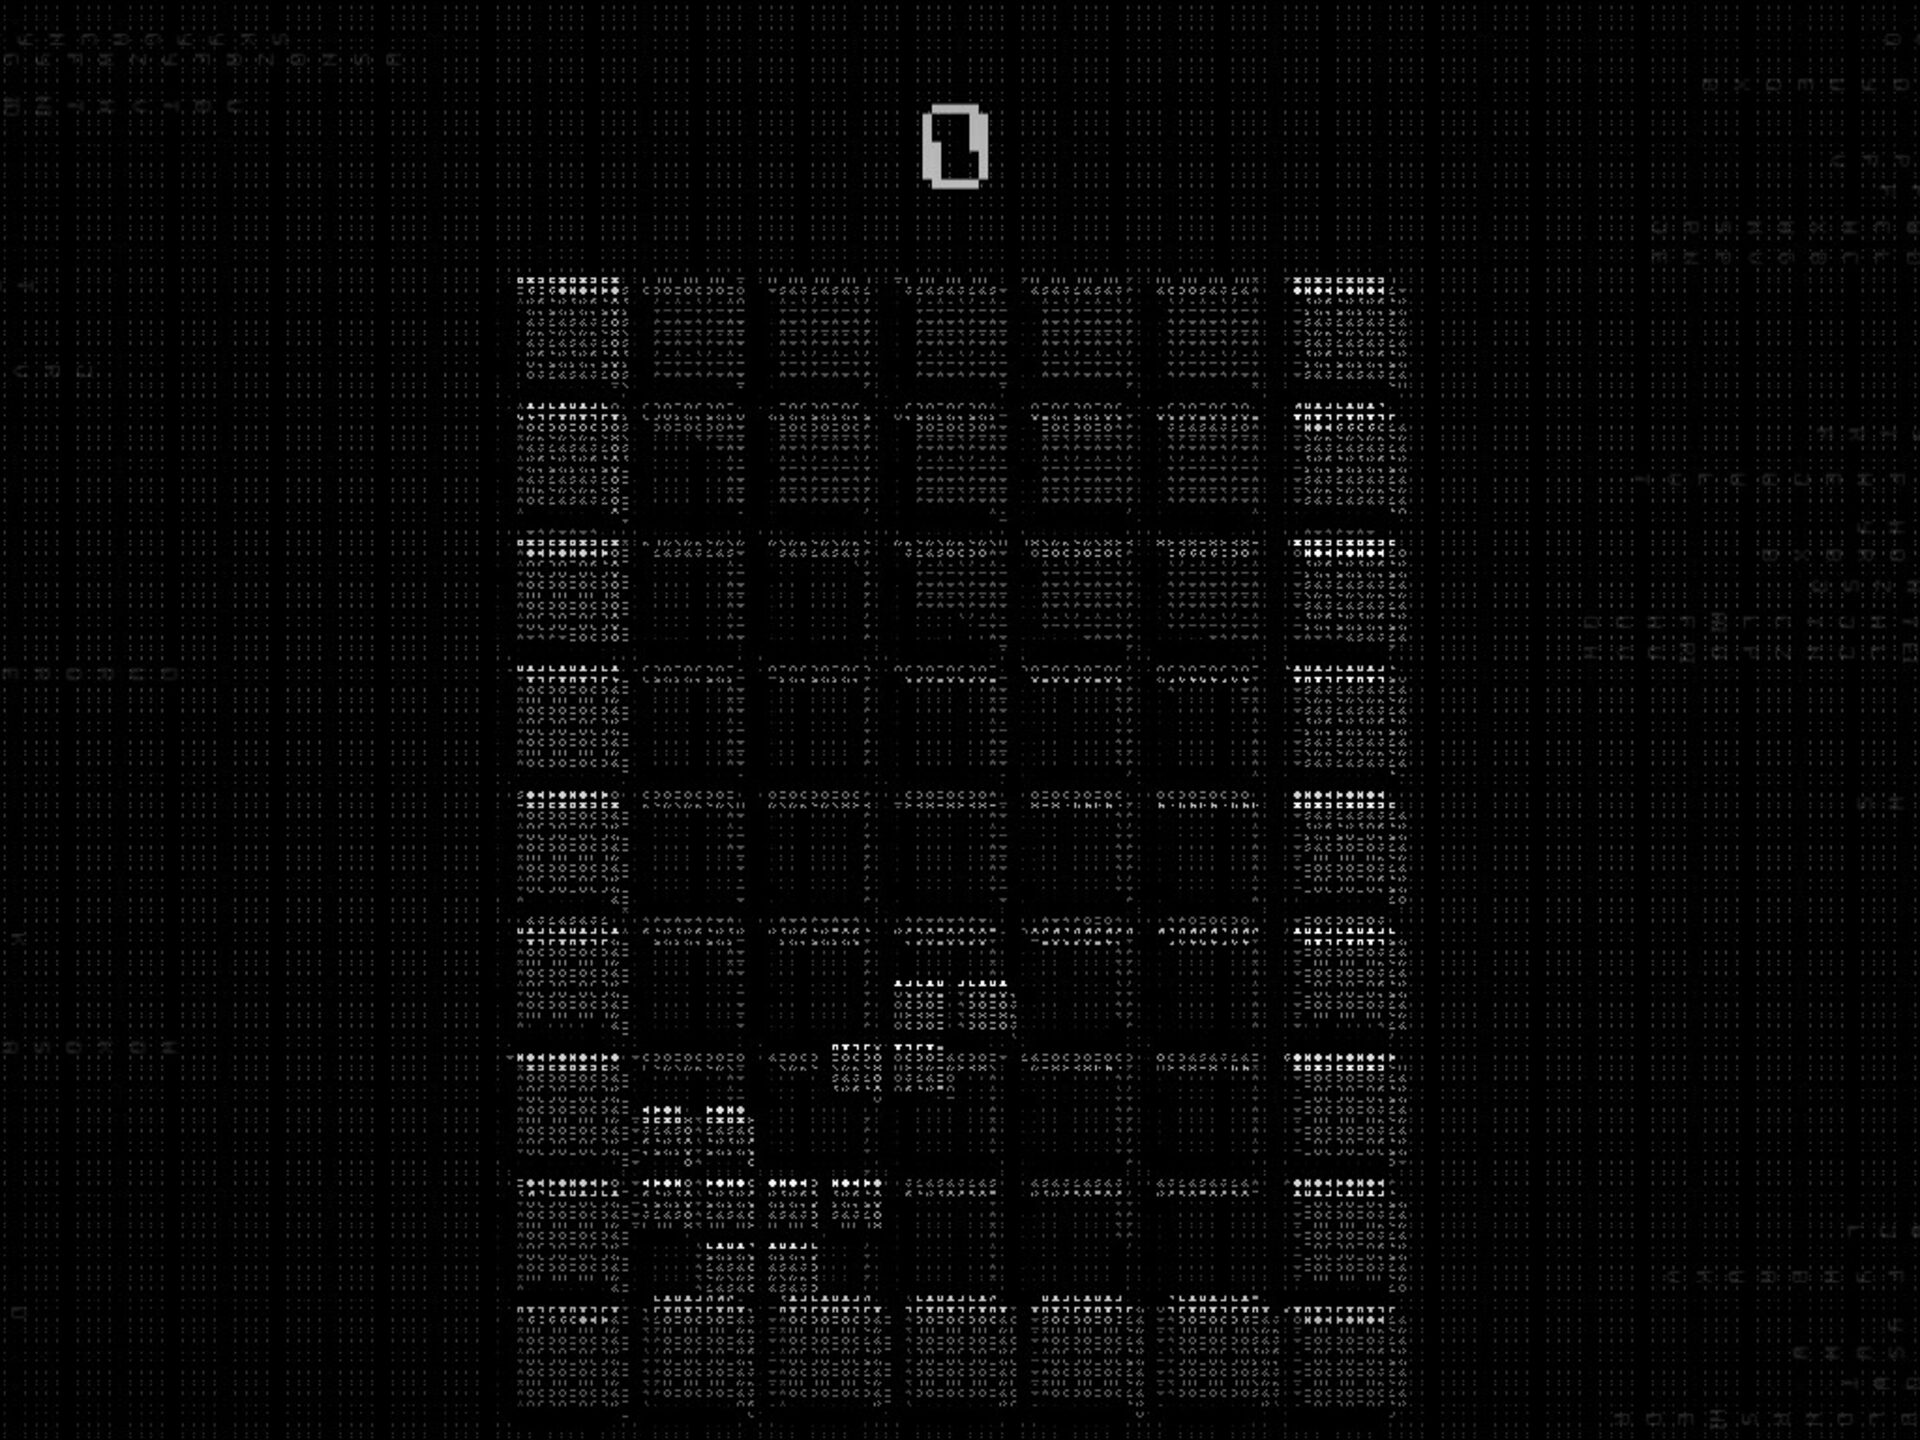 ASCII Game Series: Blocks Steam CD Key